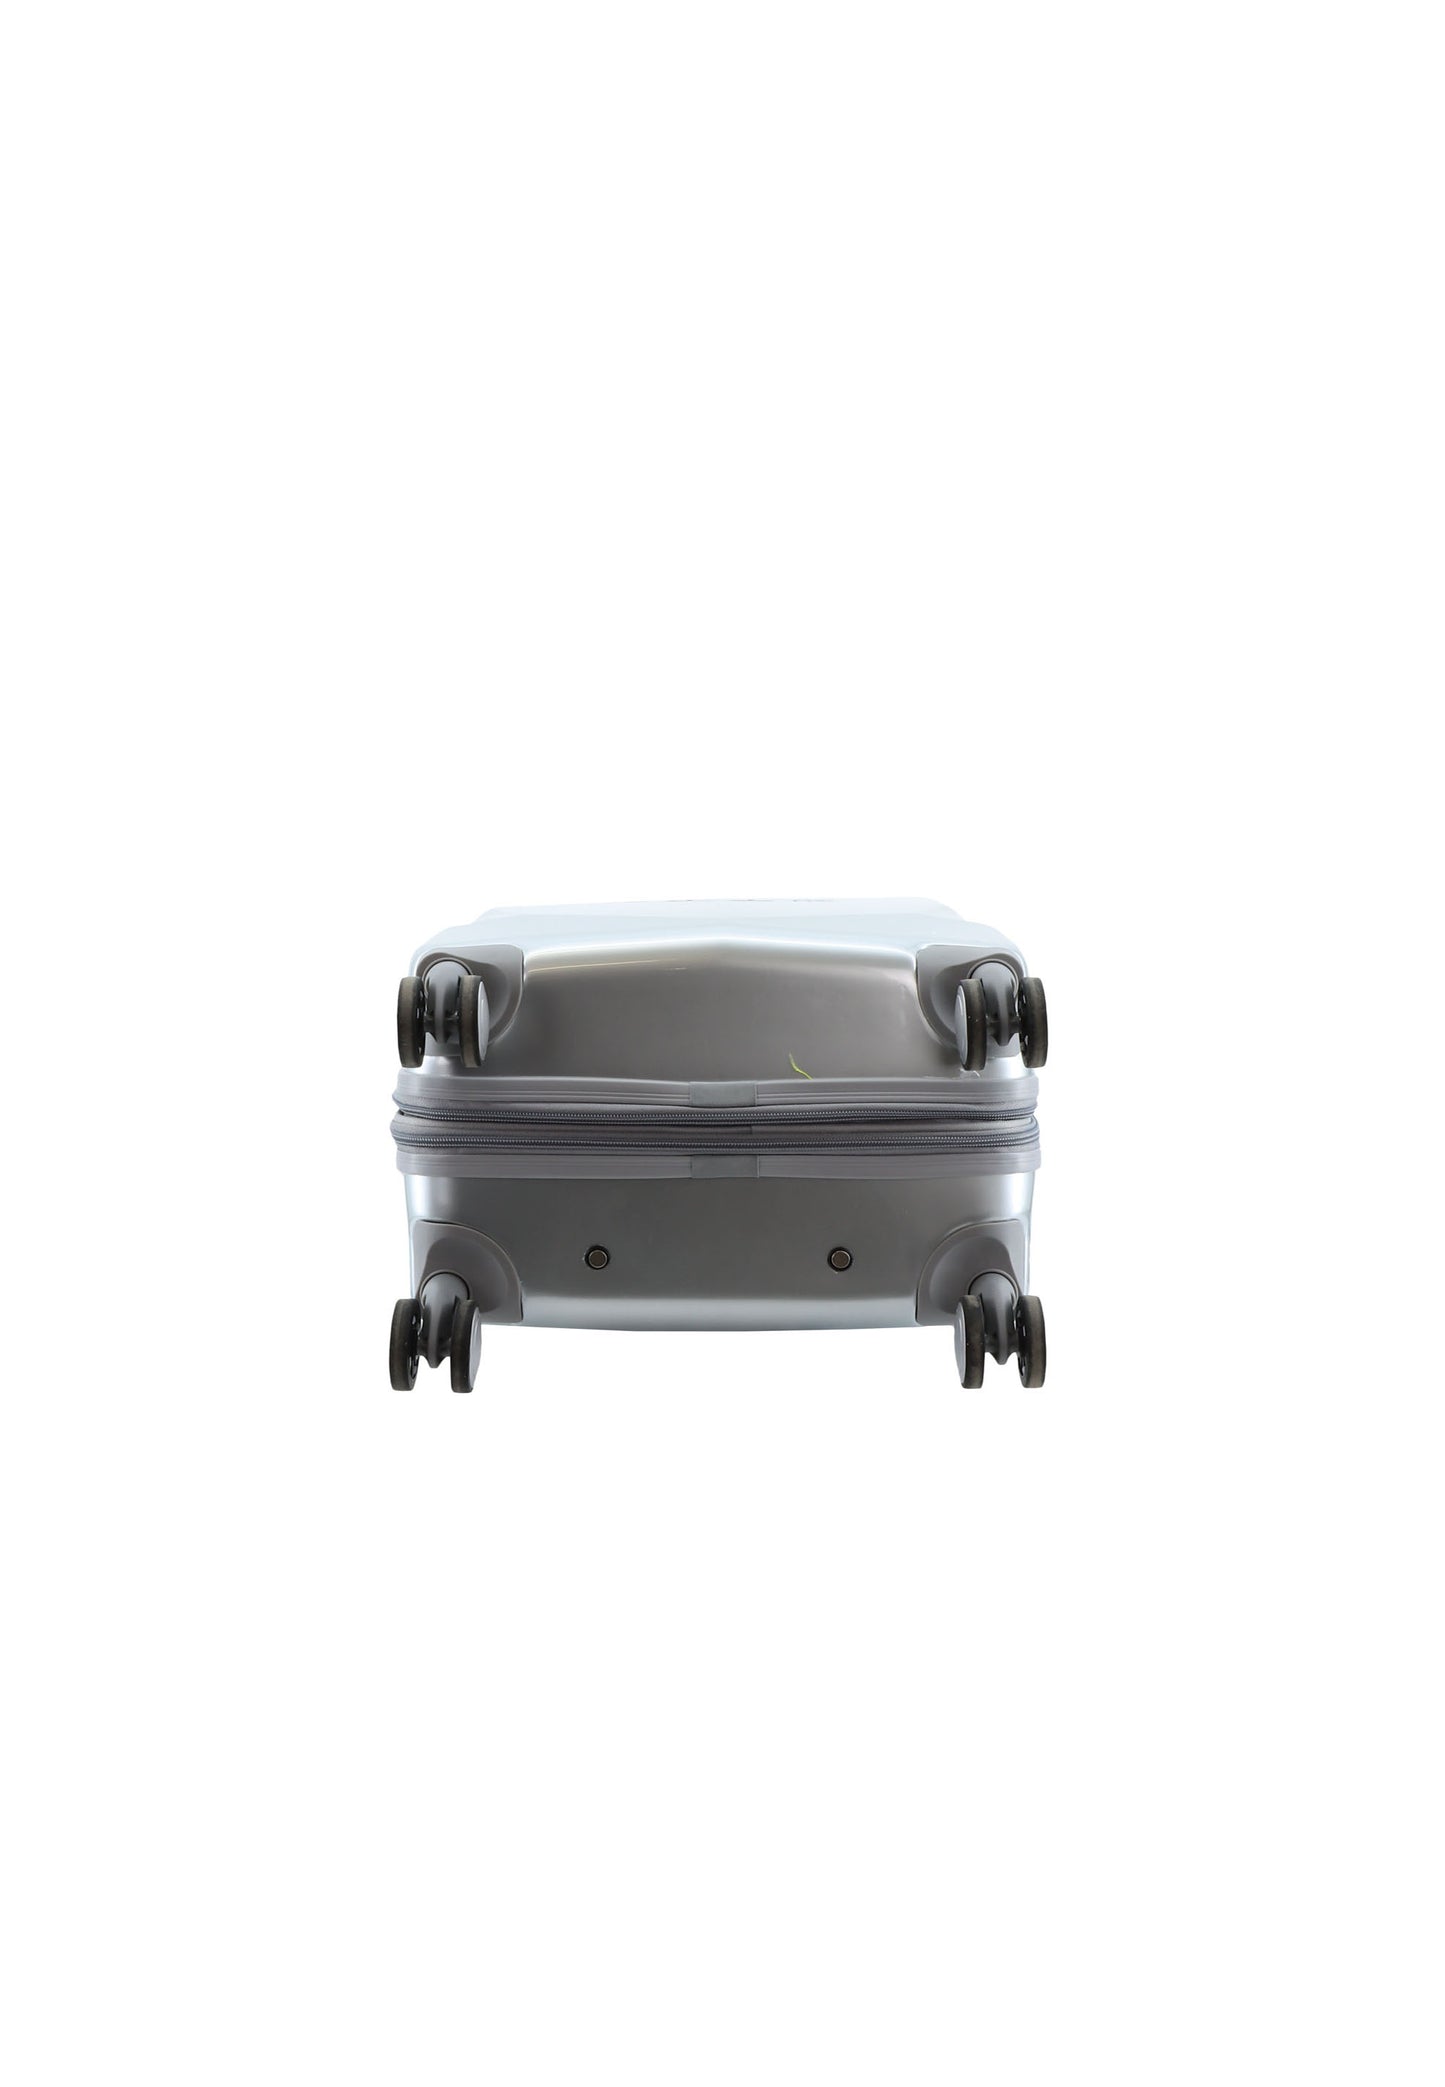 ELLE Diamond Handbagage Harde Koffer / Trolley / Reiskoffer - 56.5 cm (Small) - Zilver